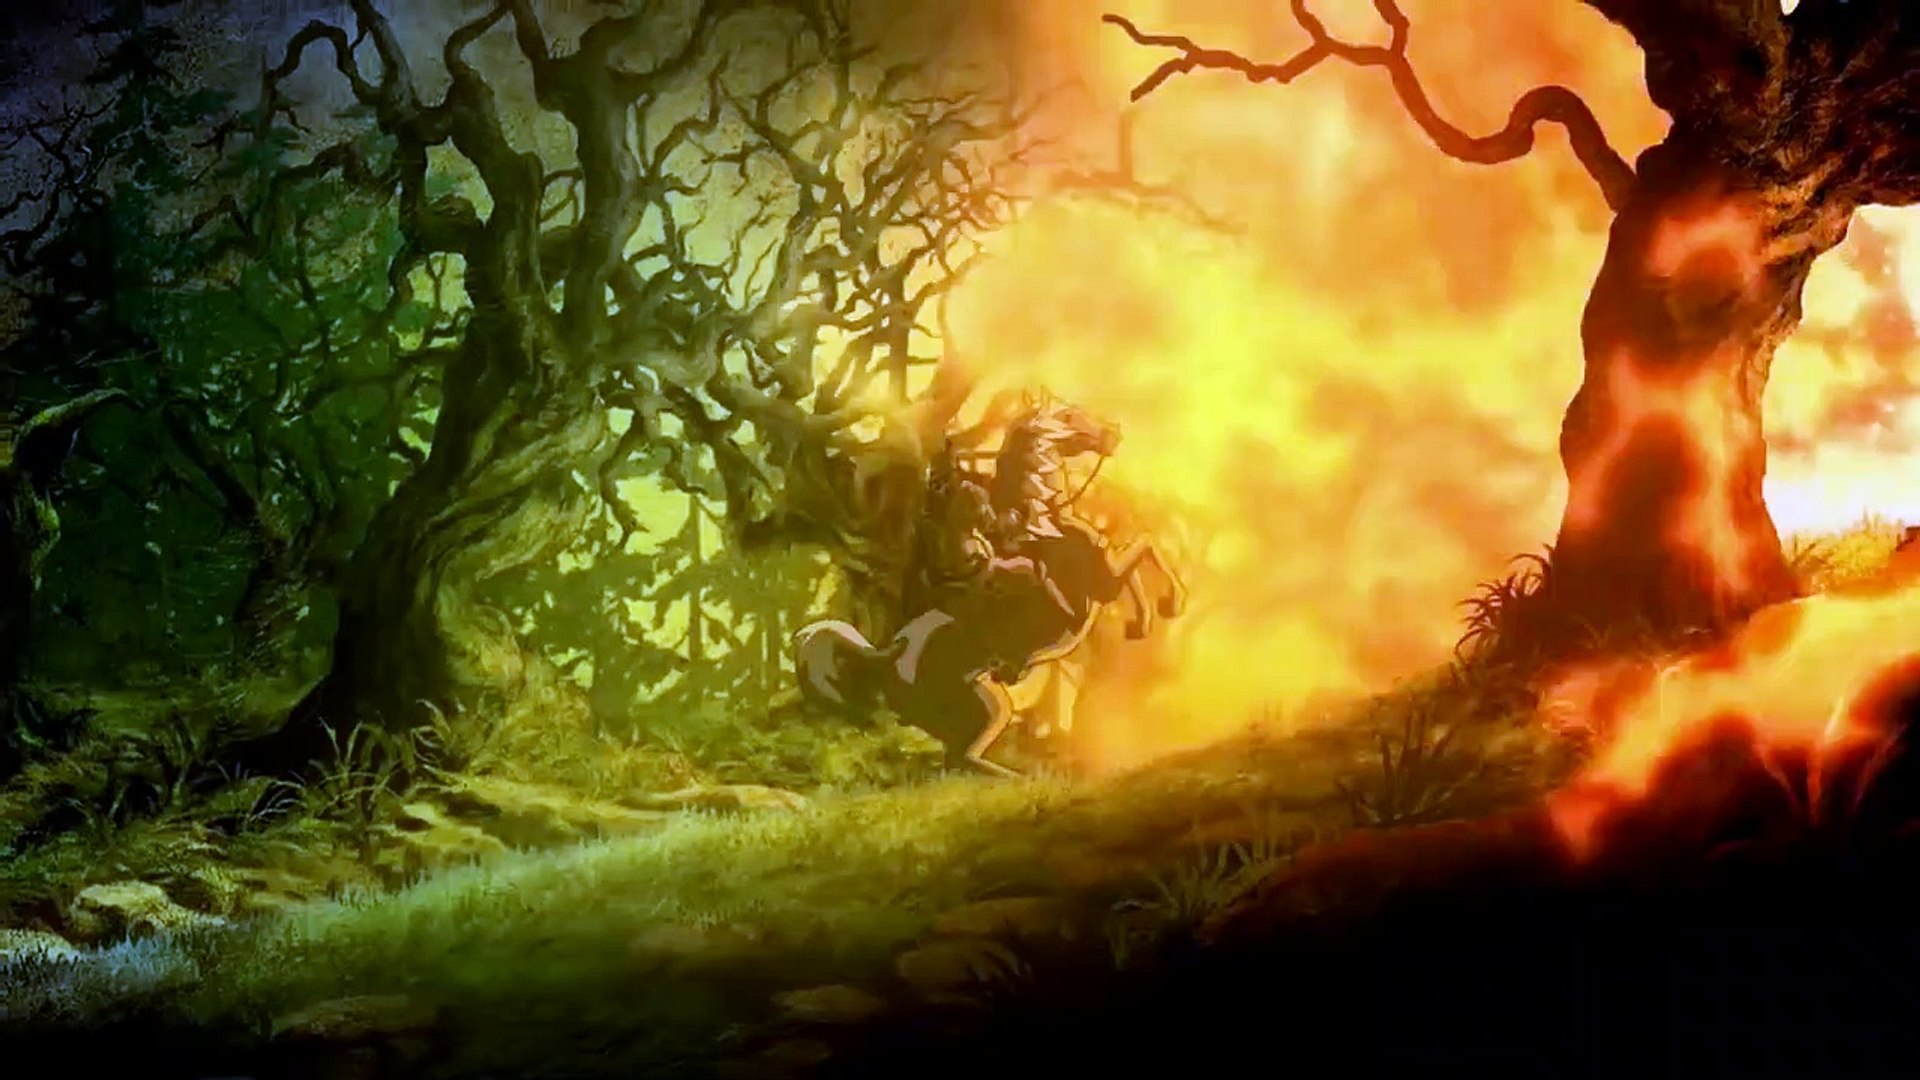 Dante's Inferno: An Animated Epic (2010) - FAN TRAILER (HD) 